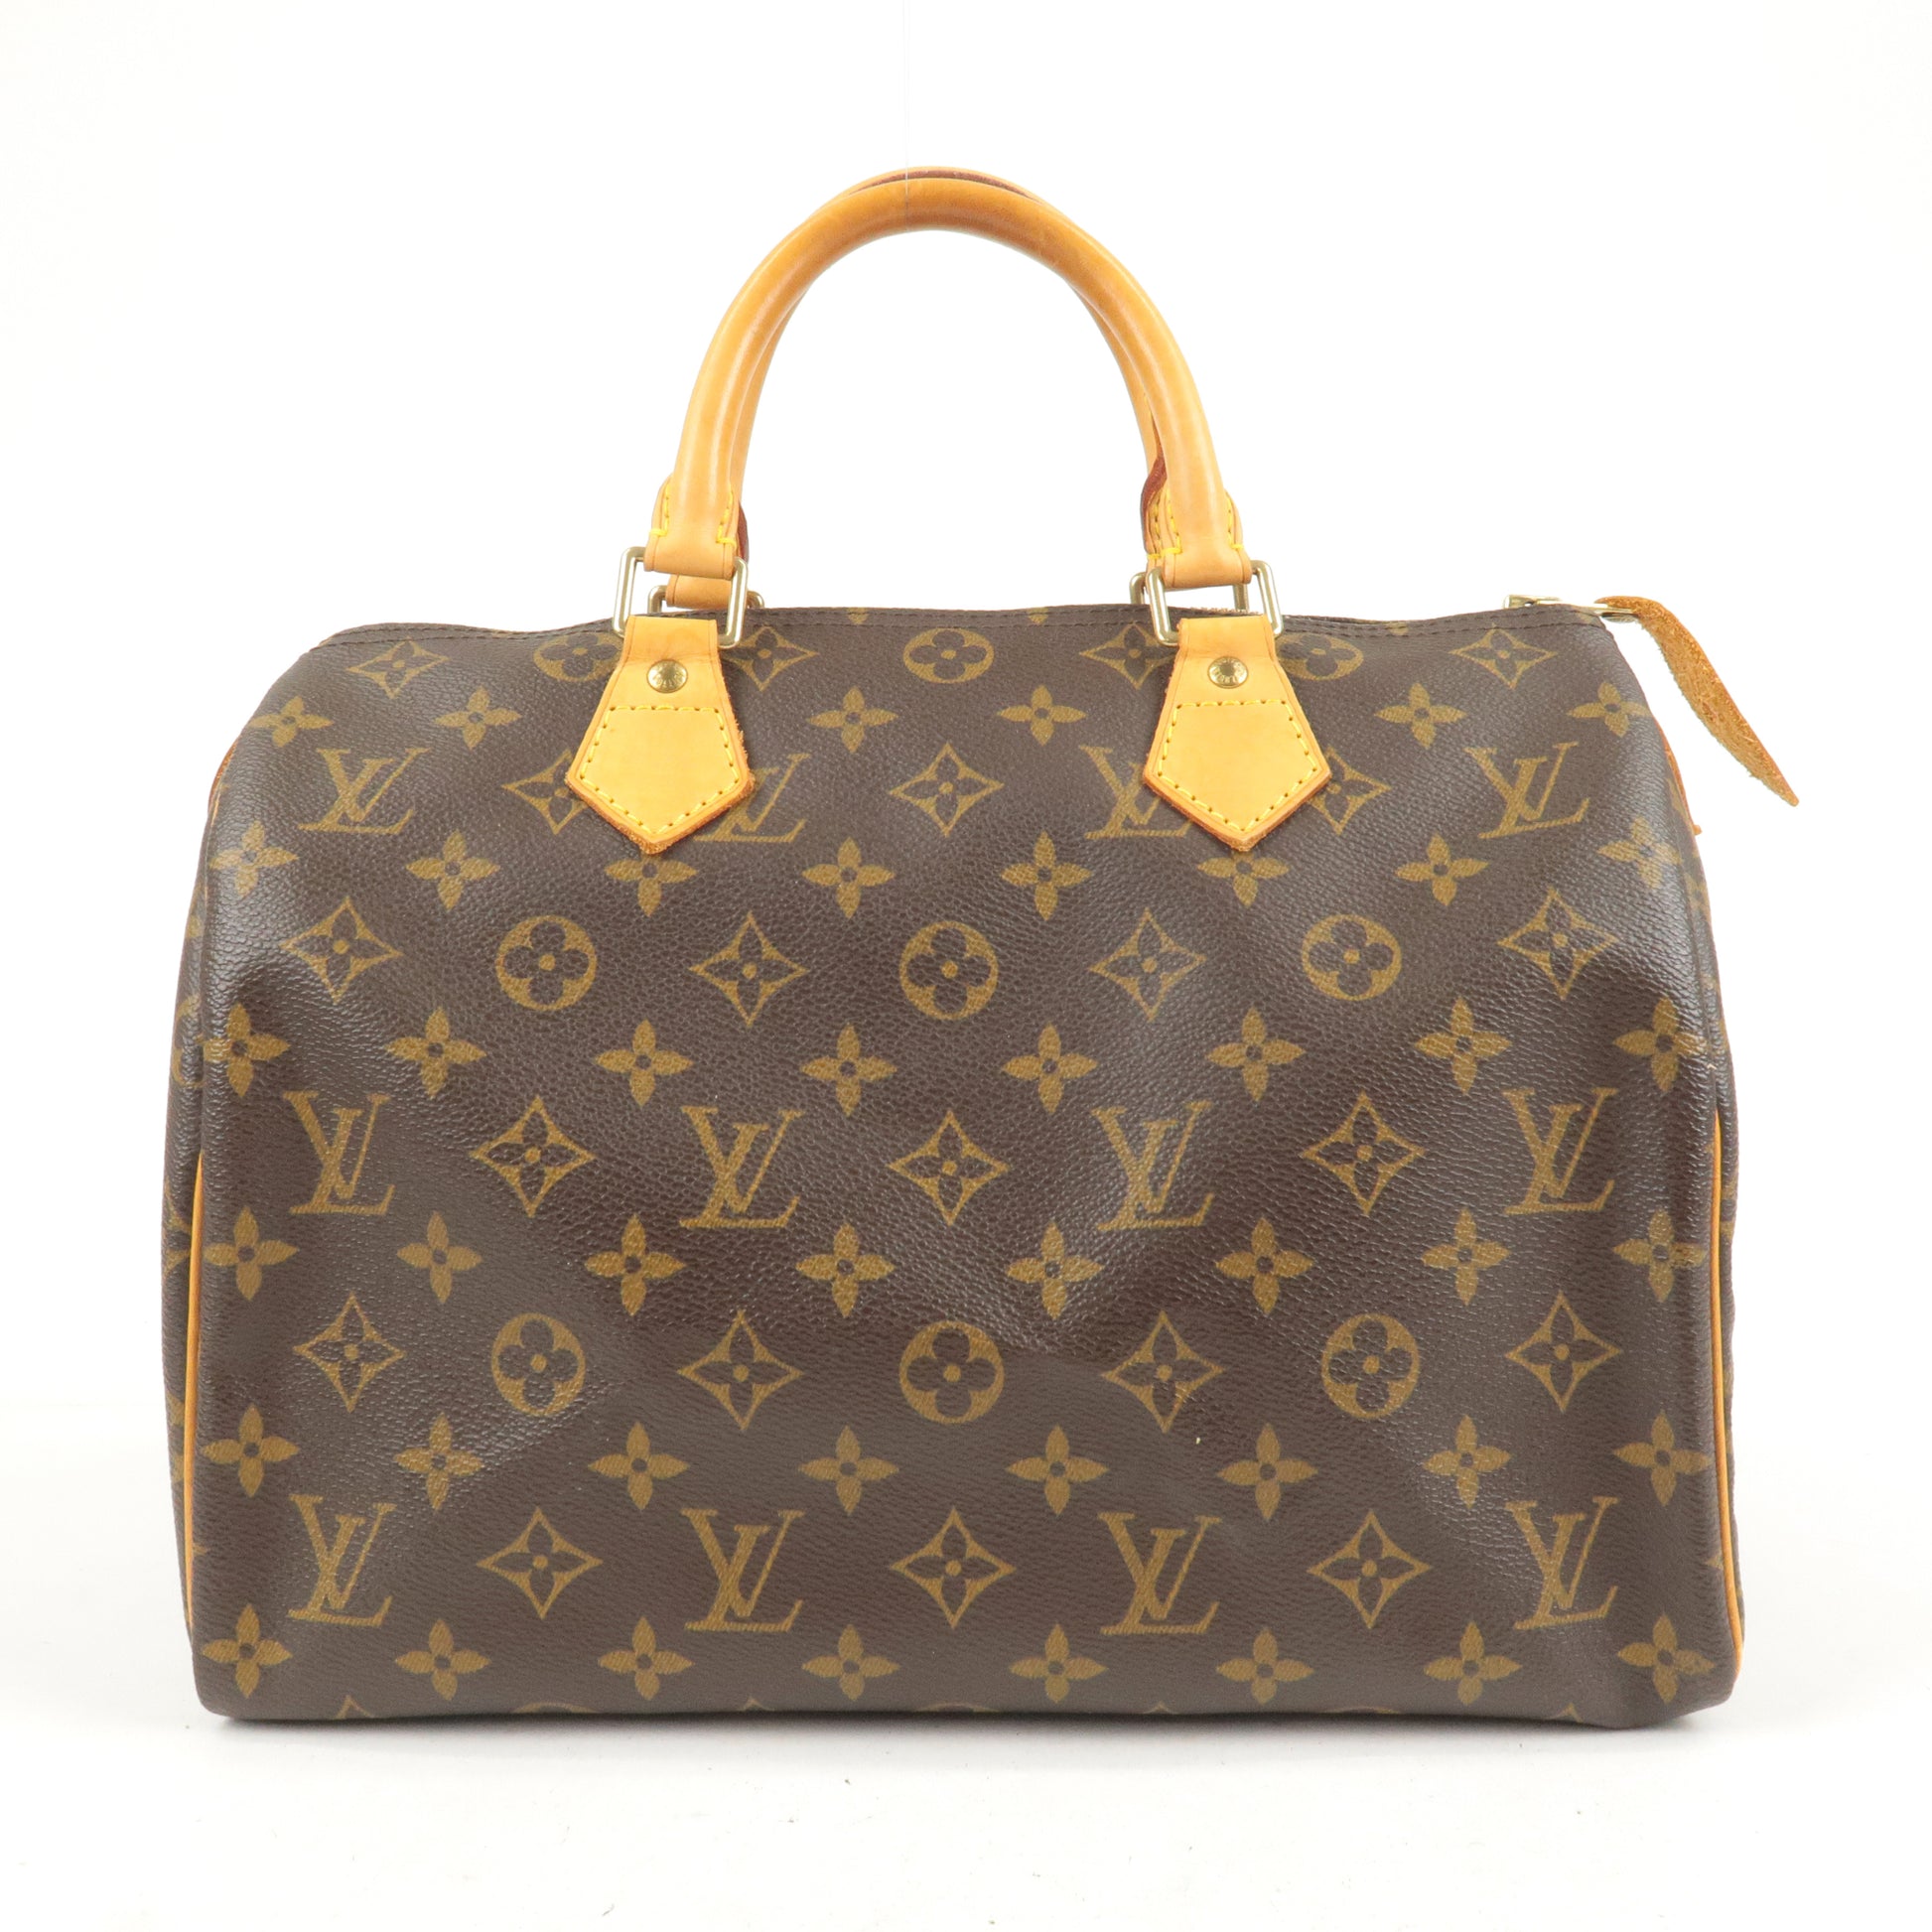 Designer Bag Review Gucci Boston vs LV Speedy B 30 - 2015 